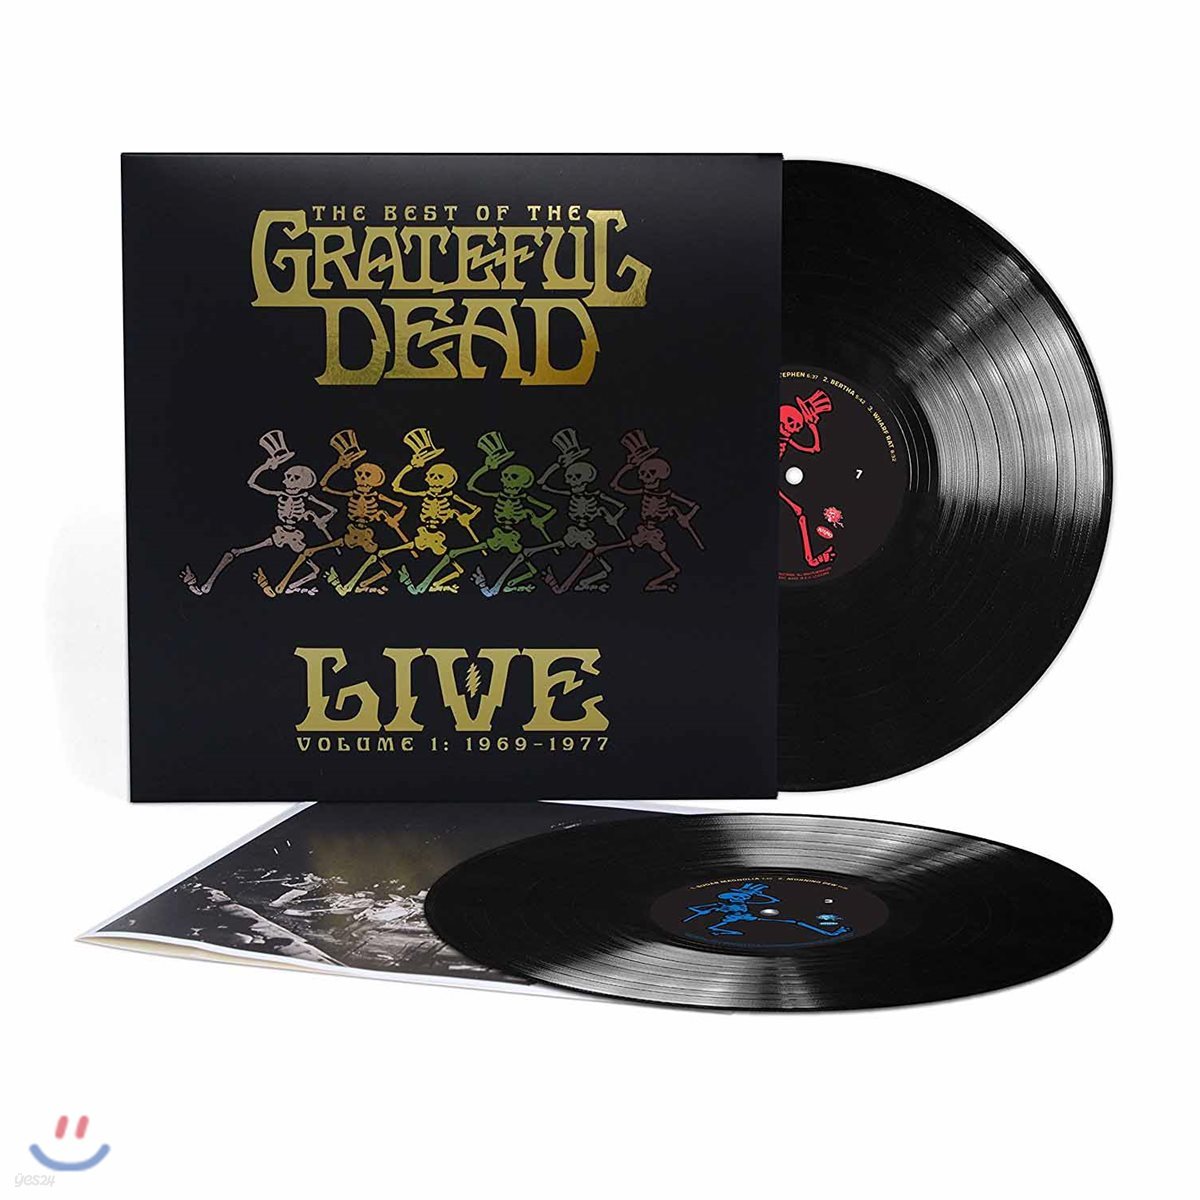 Grateful Dead - The Best of the Grateful Dead Live : 그레이트풀 데드 1969-1977 라이브 실황 베스트 컬렉션 [2LP]